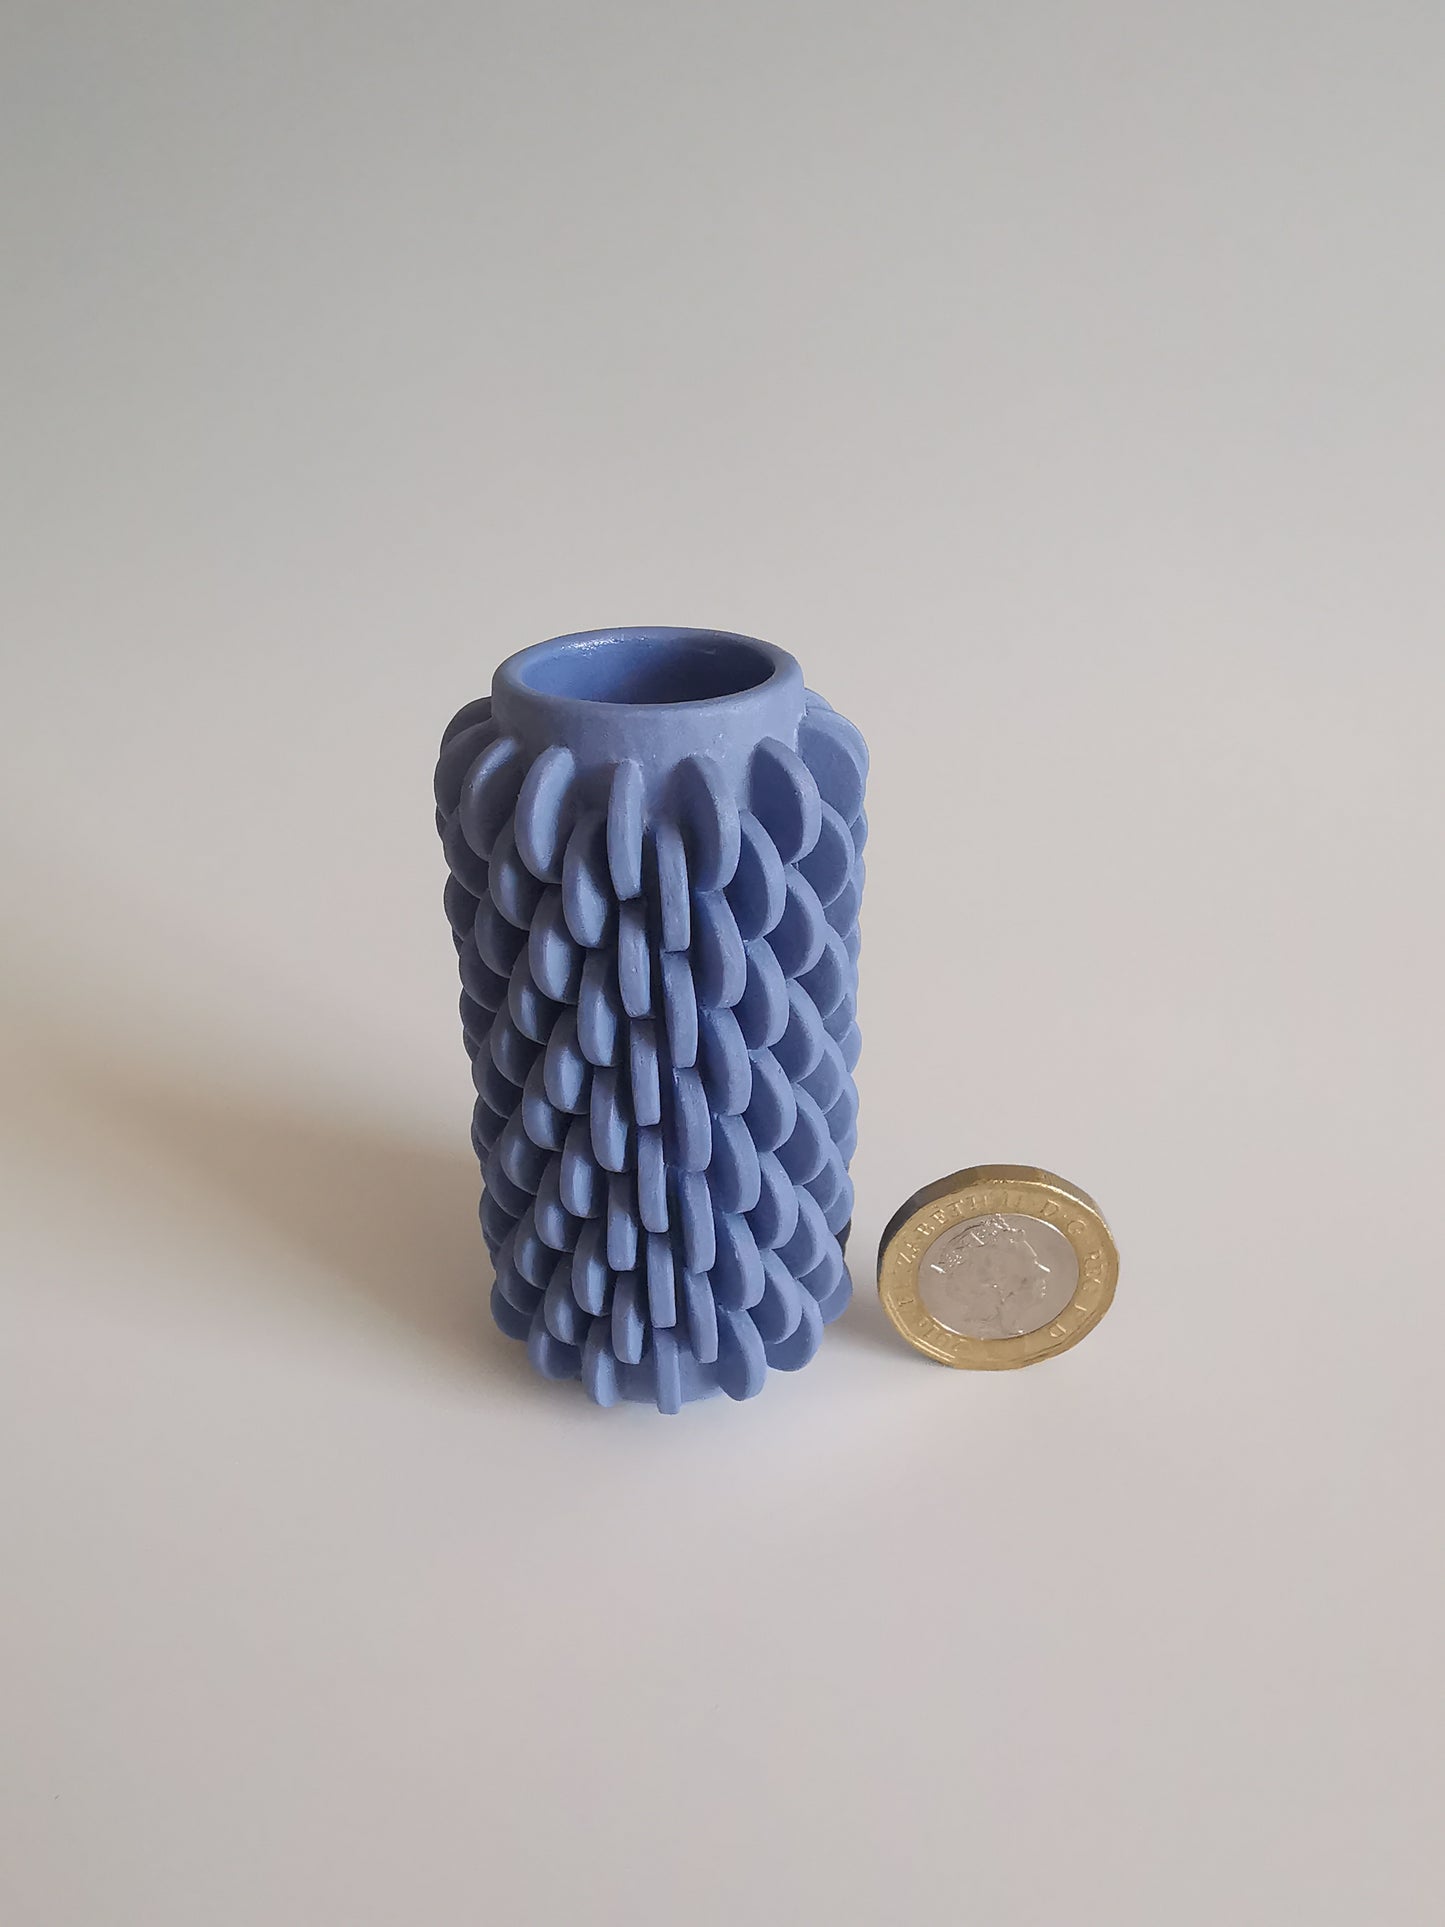 Mini Royal Blue Vase with Disks